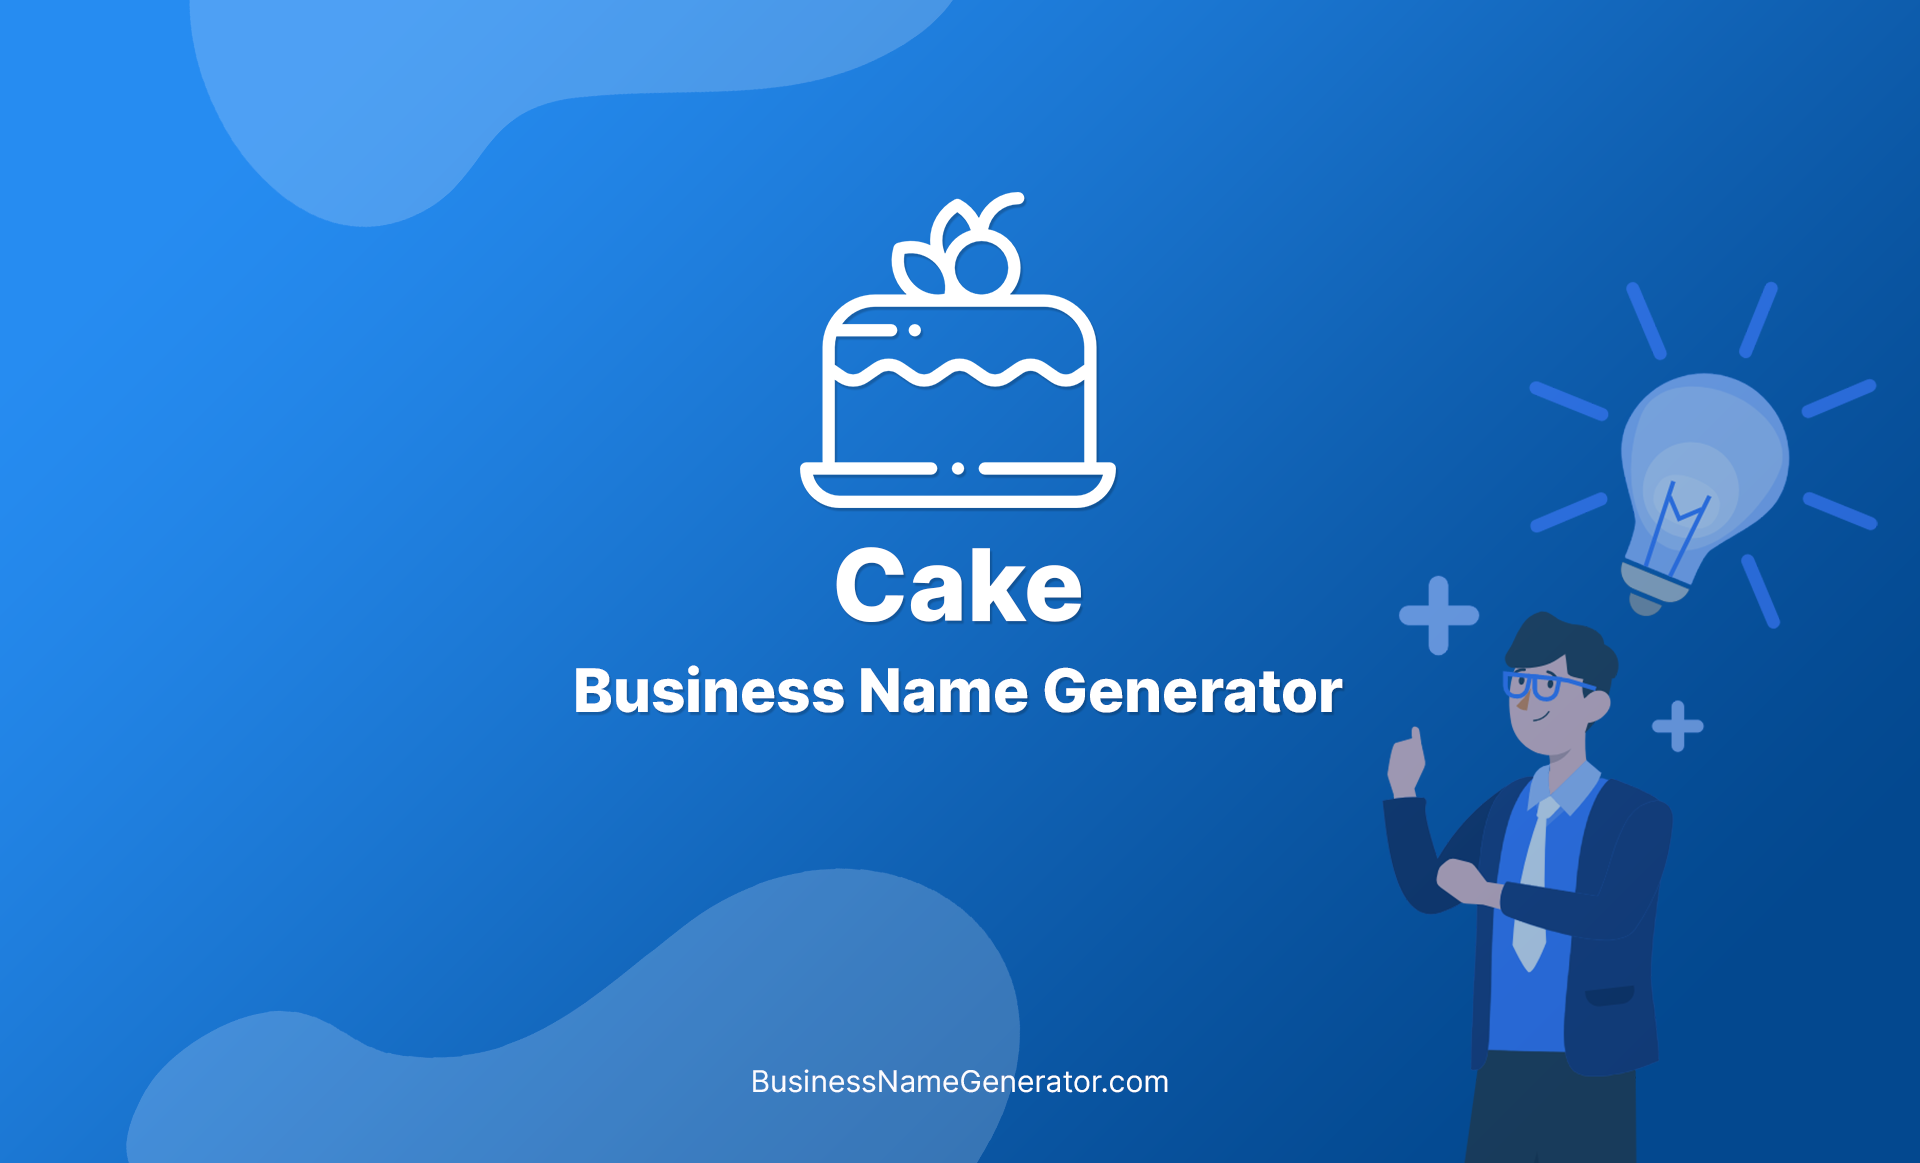 Cake Business Name Generator